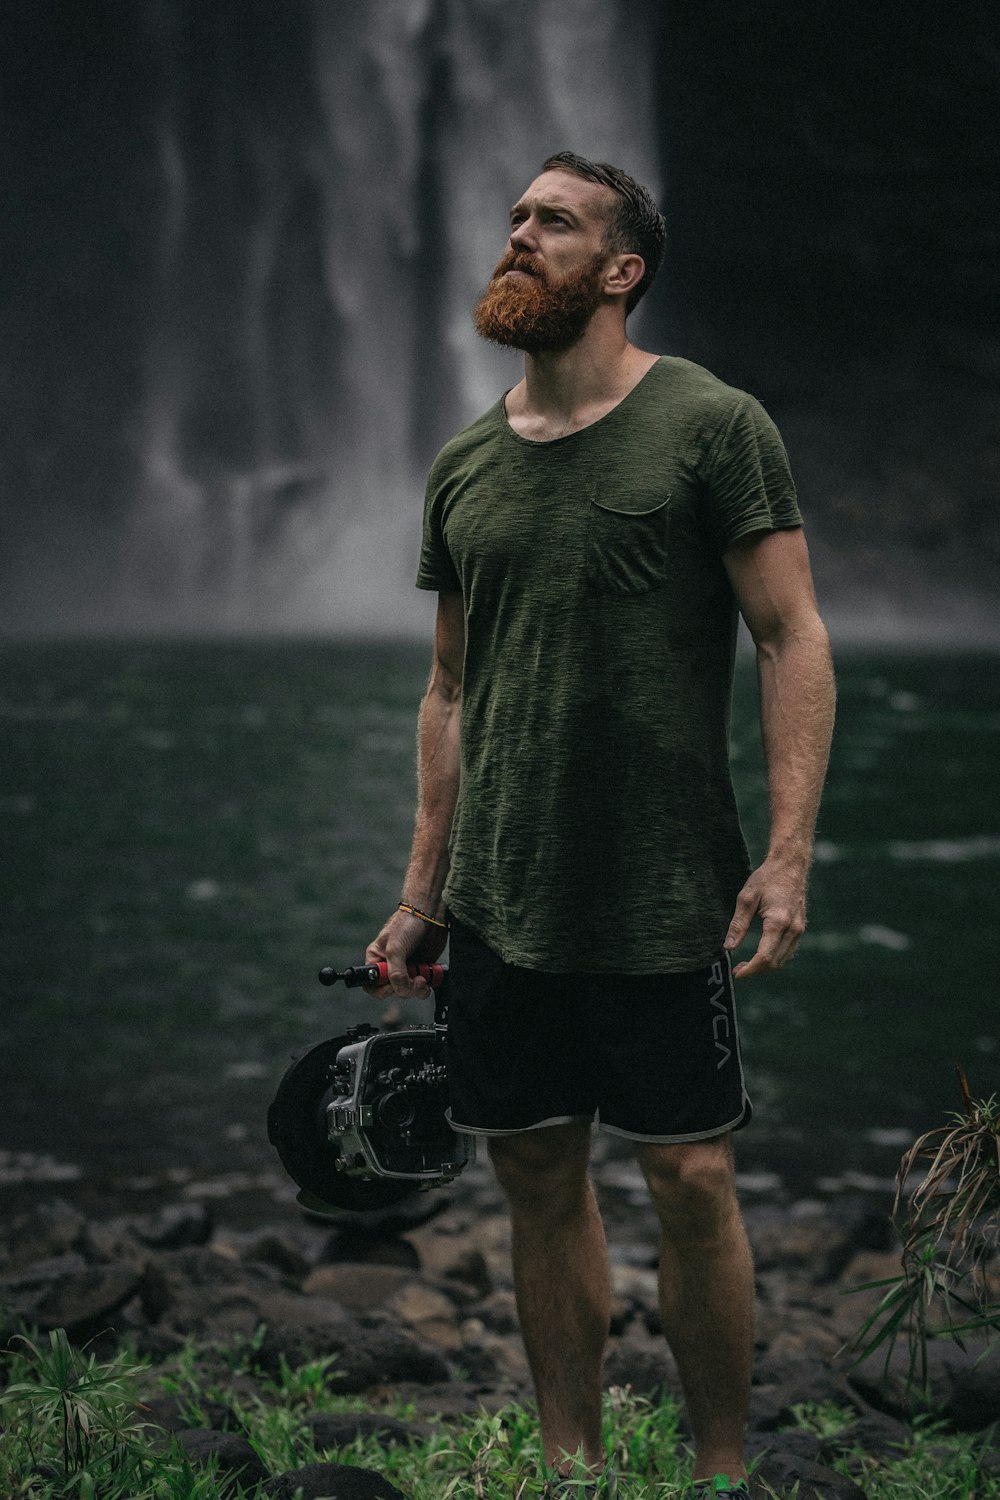 Un hombre con barba parado frente a una cascada